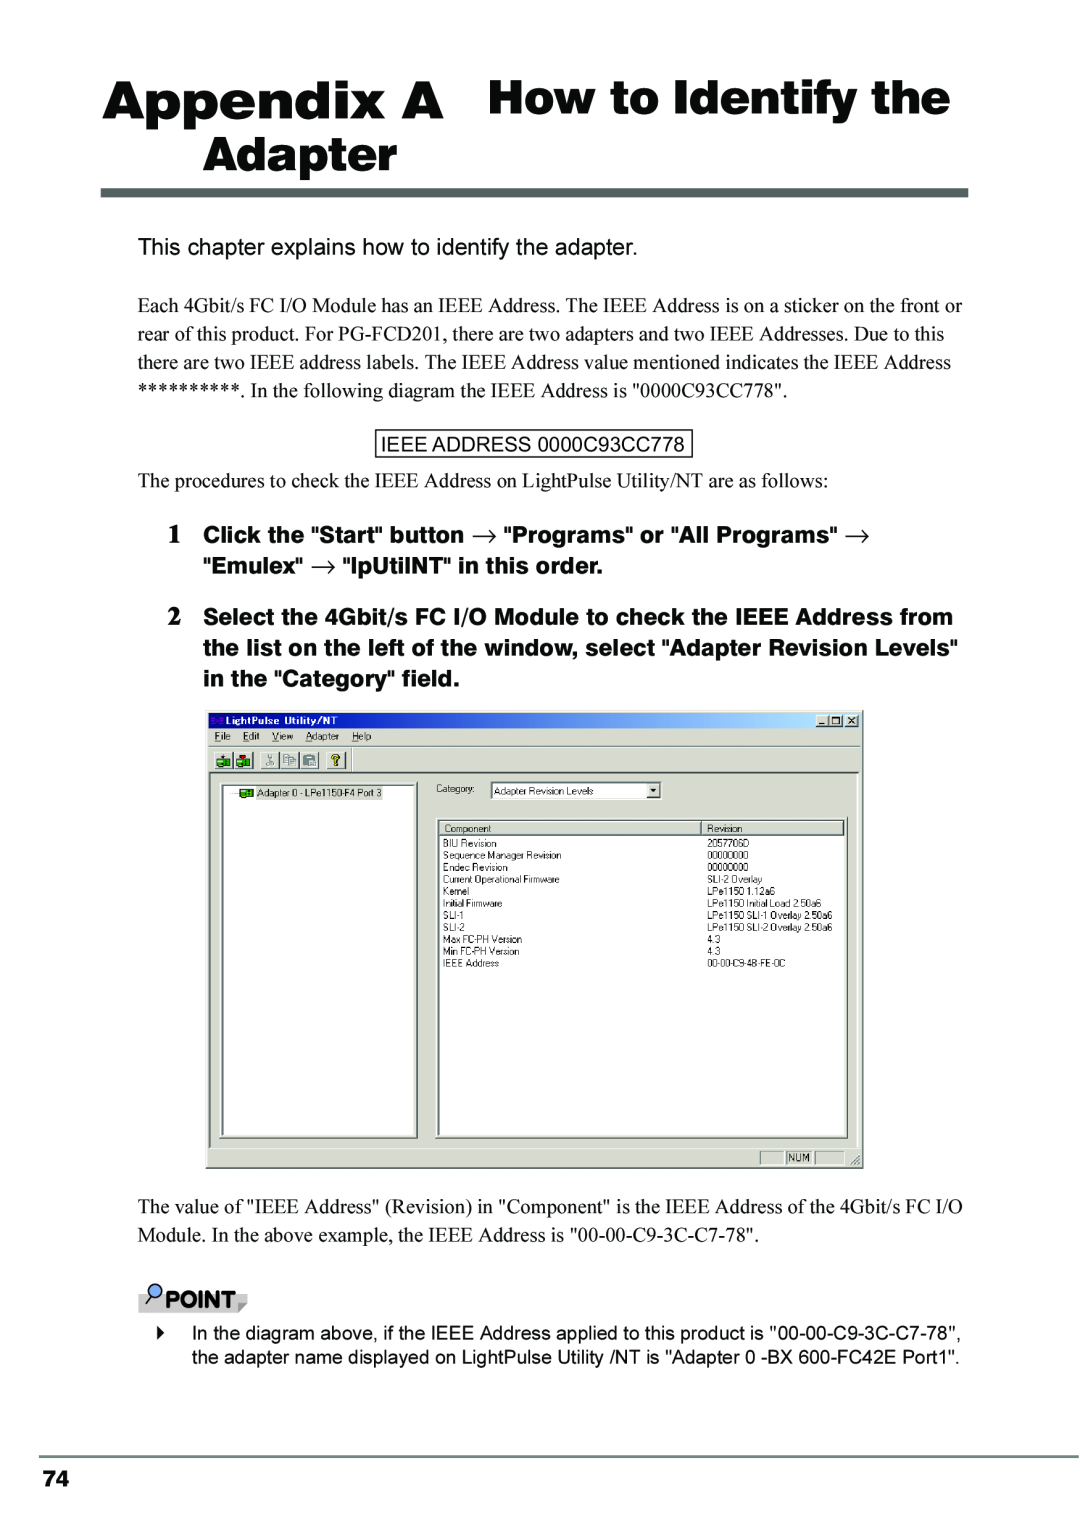 Fujitsu 4Gbit/s FC I/O Modules manual Appendix A How to Identify the Adapter, IEEE ADDRESS 0000C93CC778 